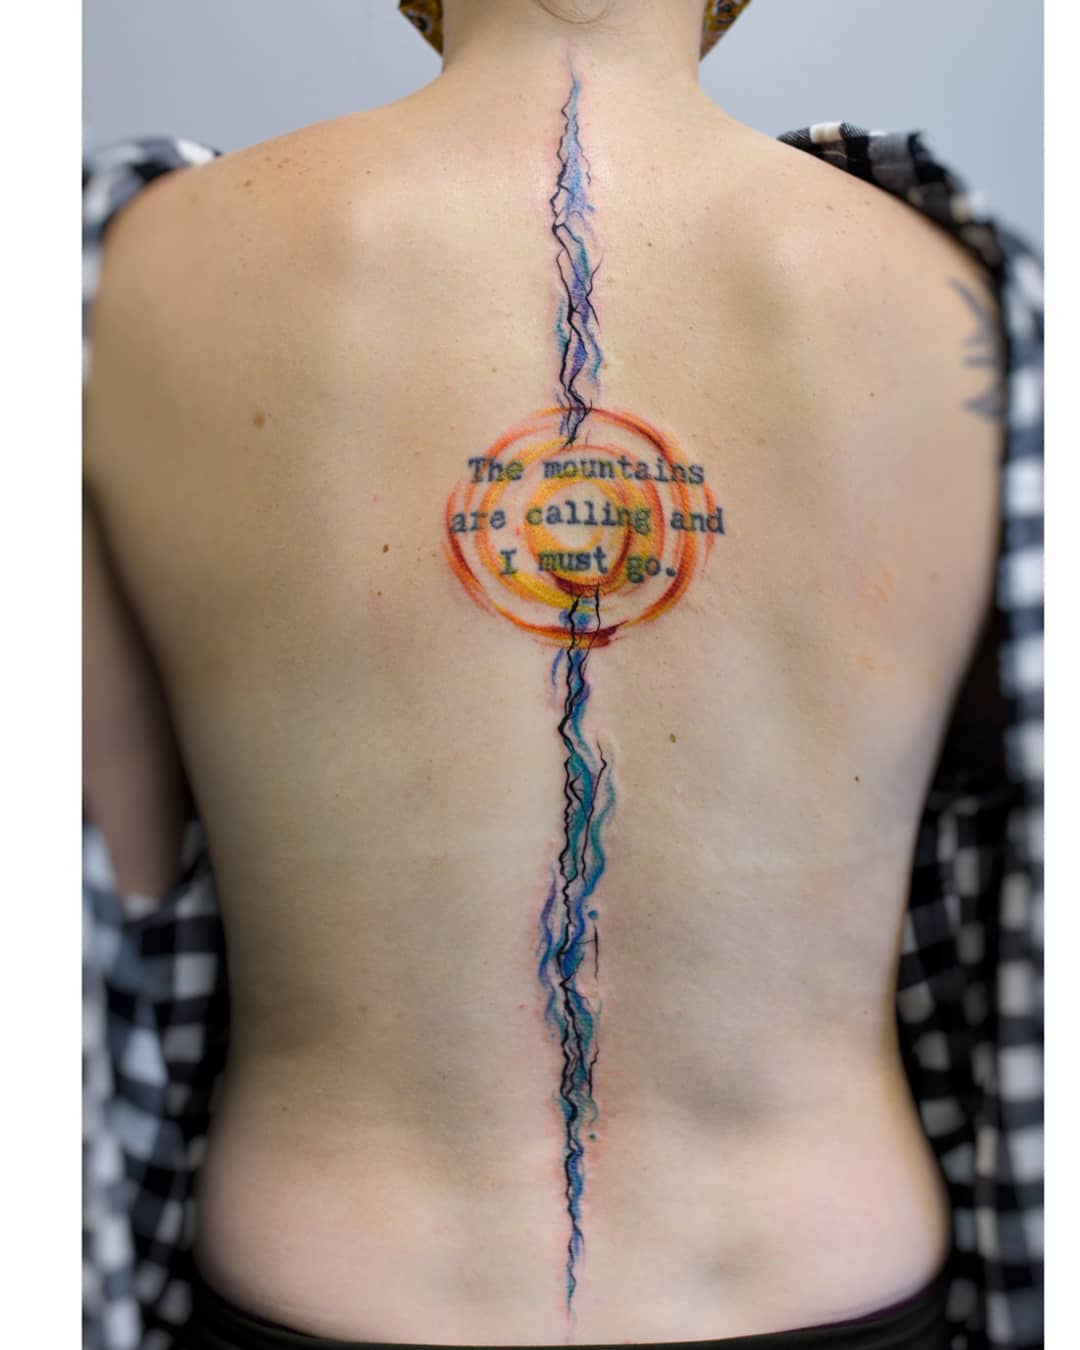 60 Excellent Tribal Tattoos Design For Back  Tattoo Designs   TattoosBagcom